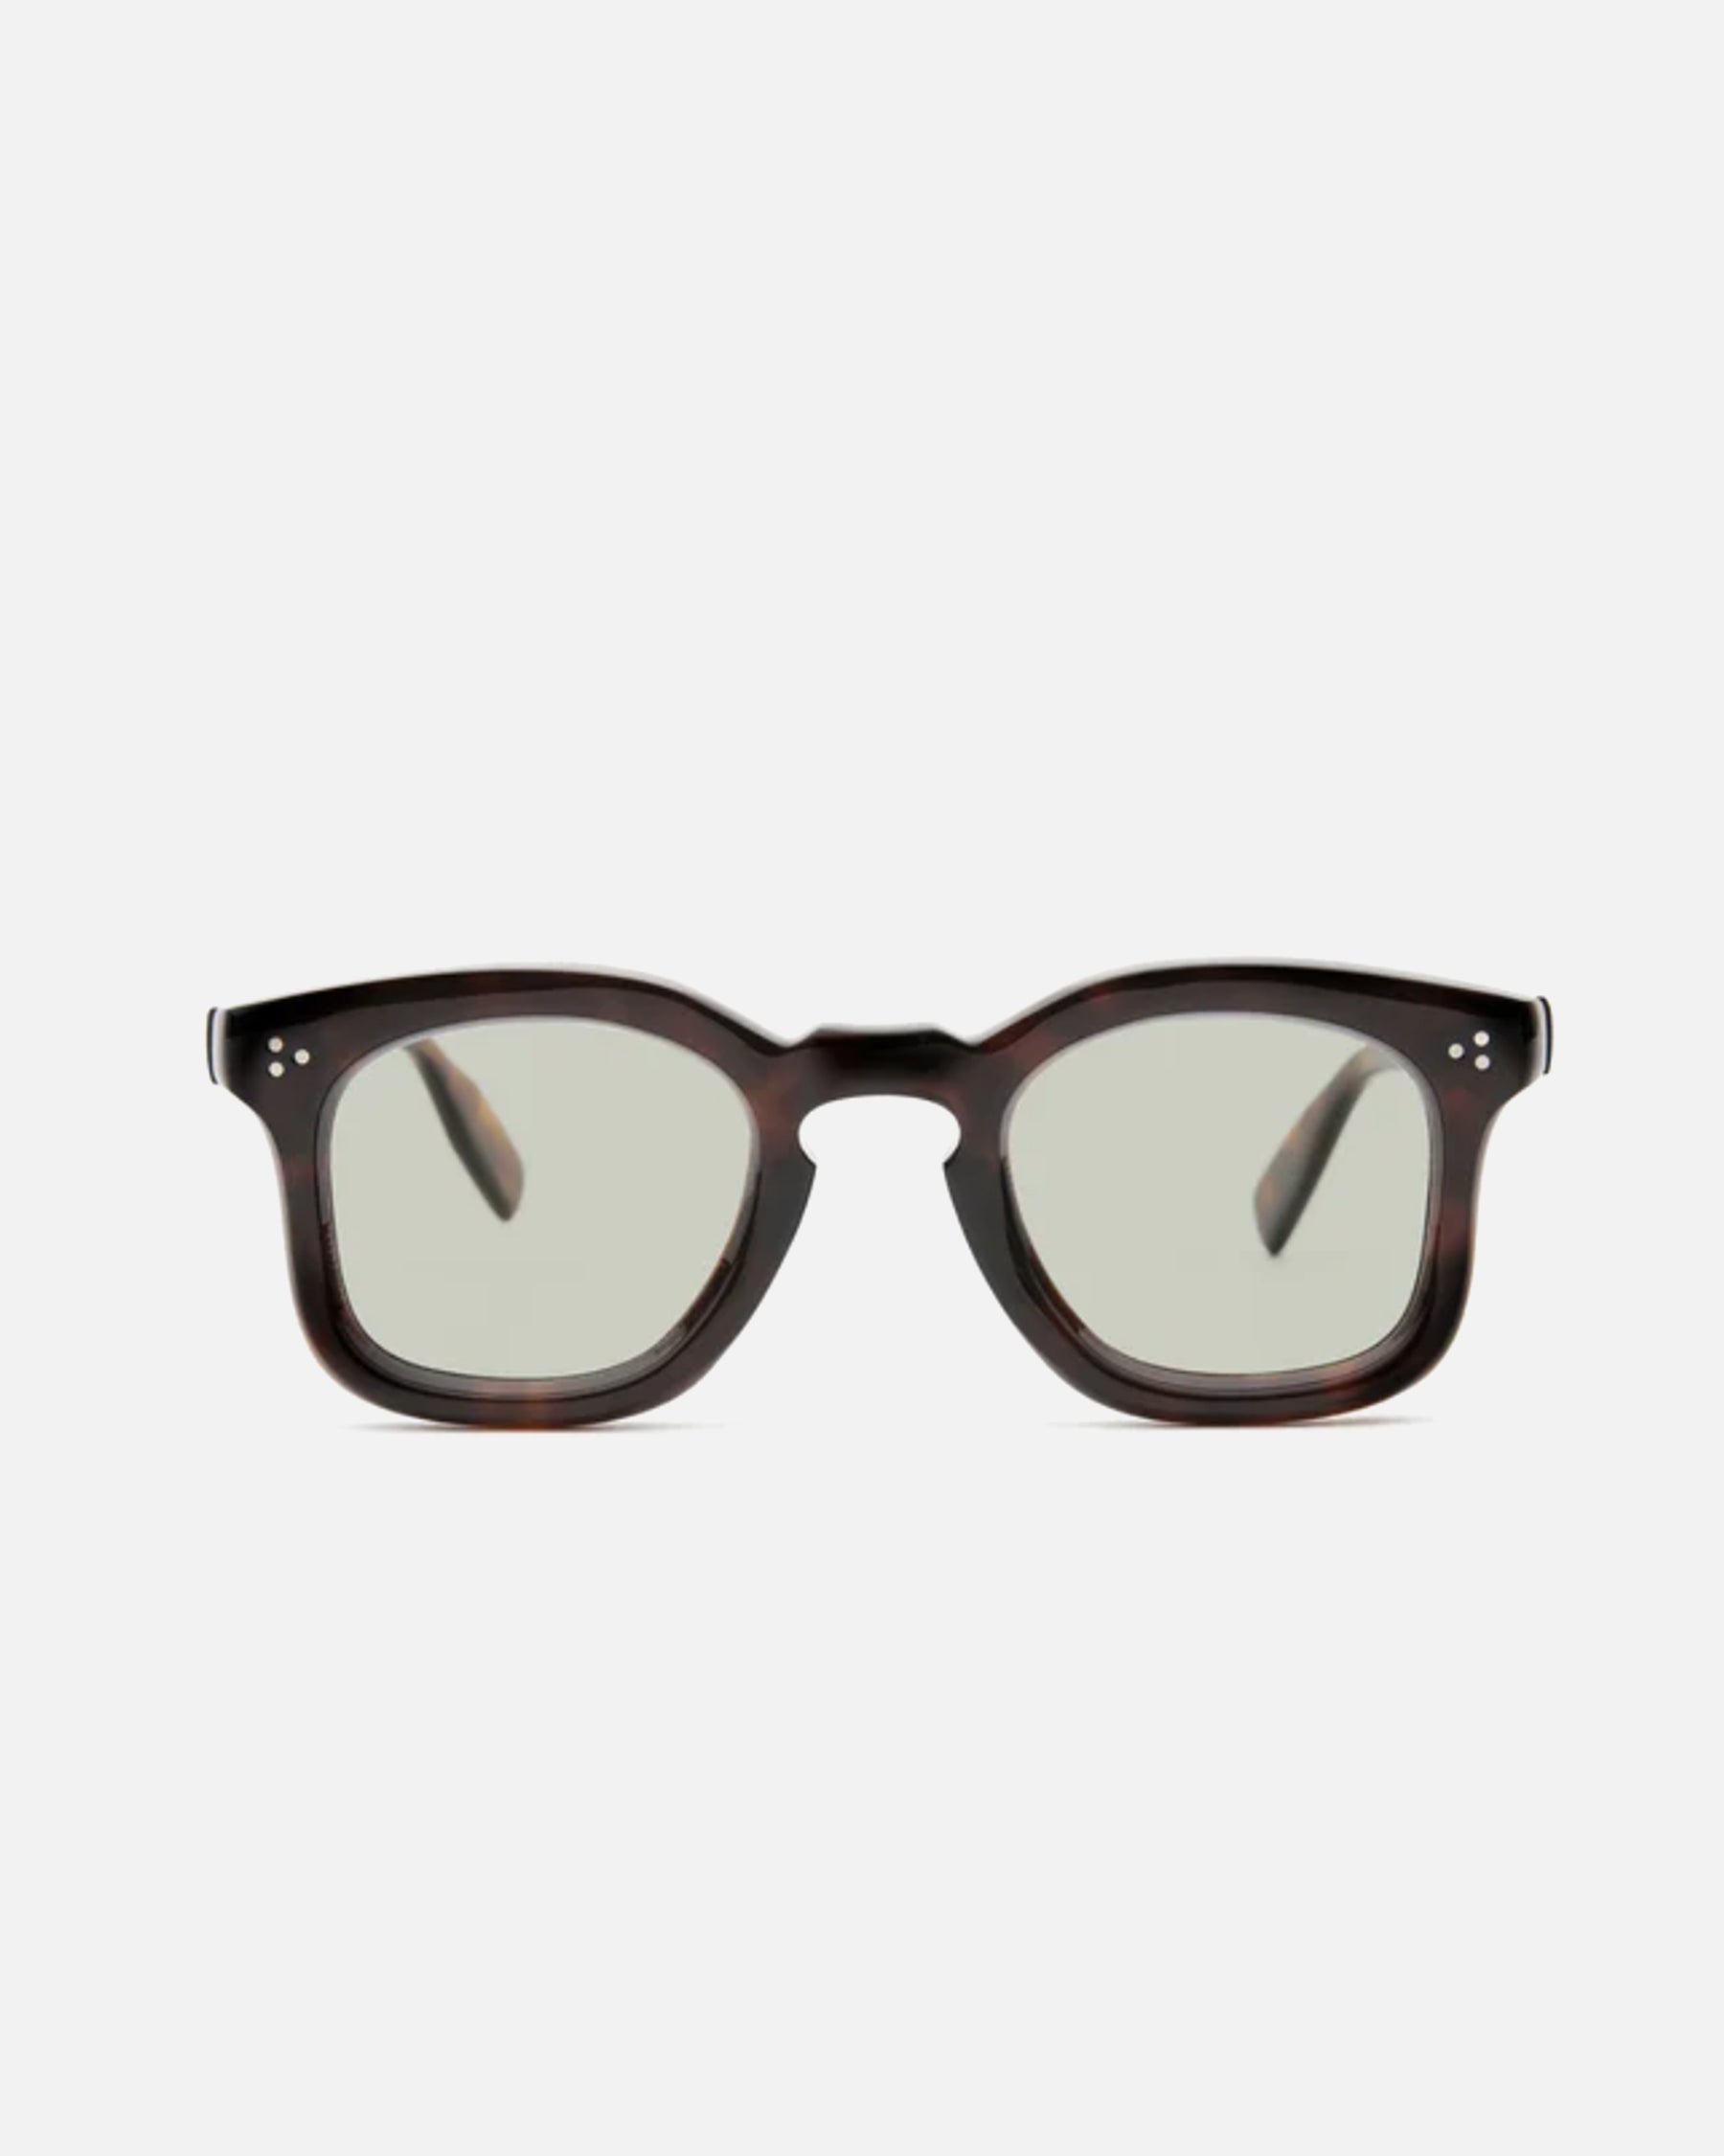 gp-17 Sunglasses ecaille / Lens: Green